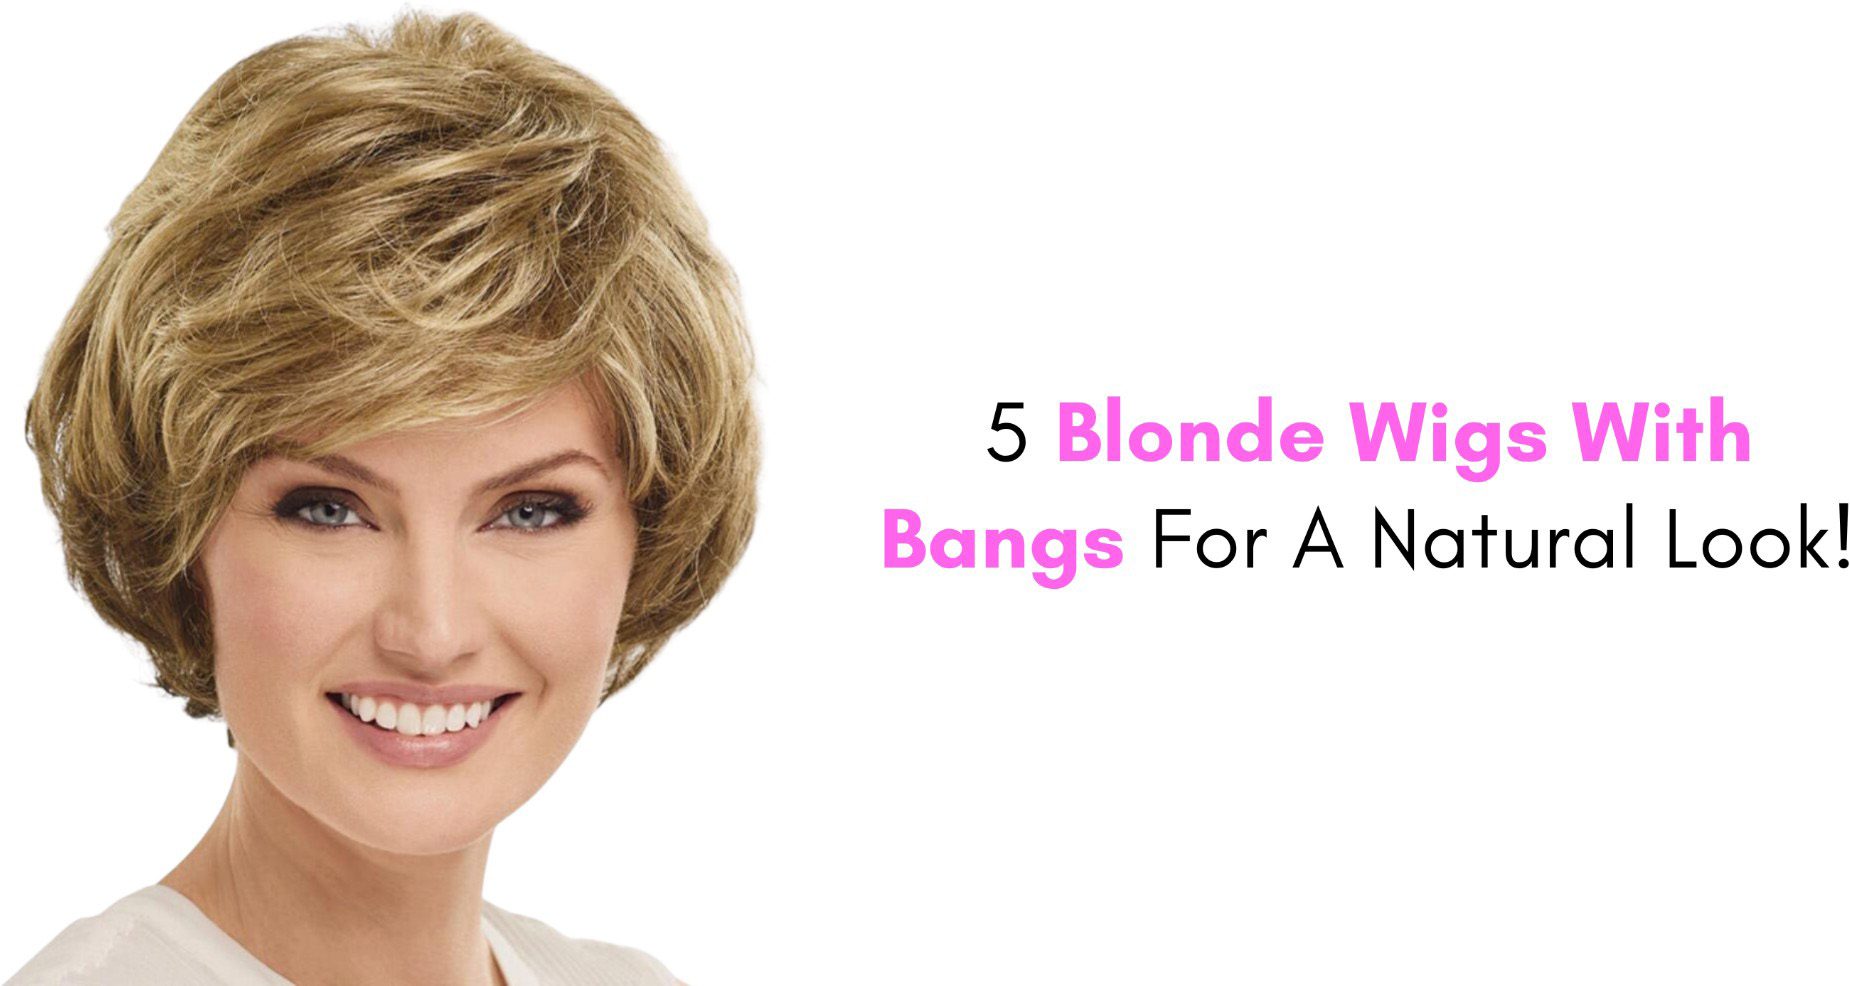 9. Kanasari Blonde Hair with Blue Bangs: A Fun and Playful Look - wide 3